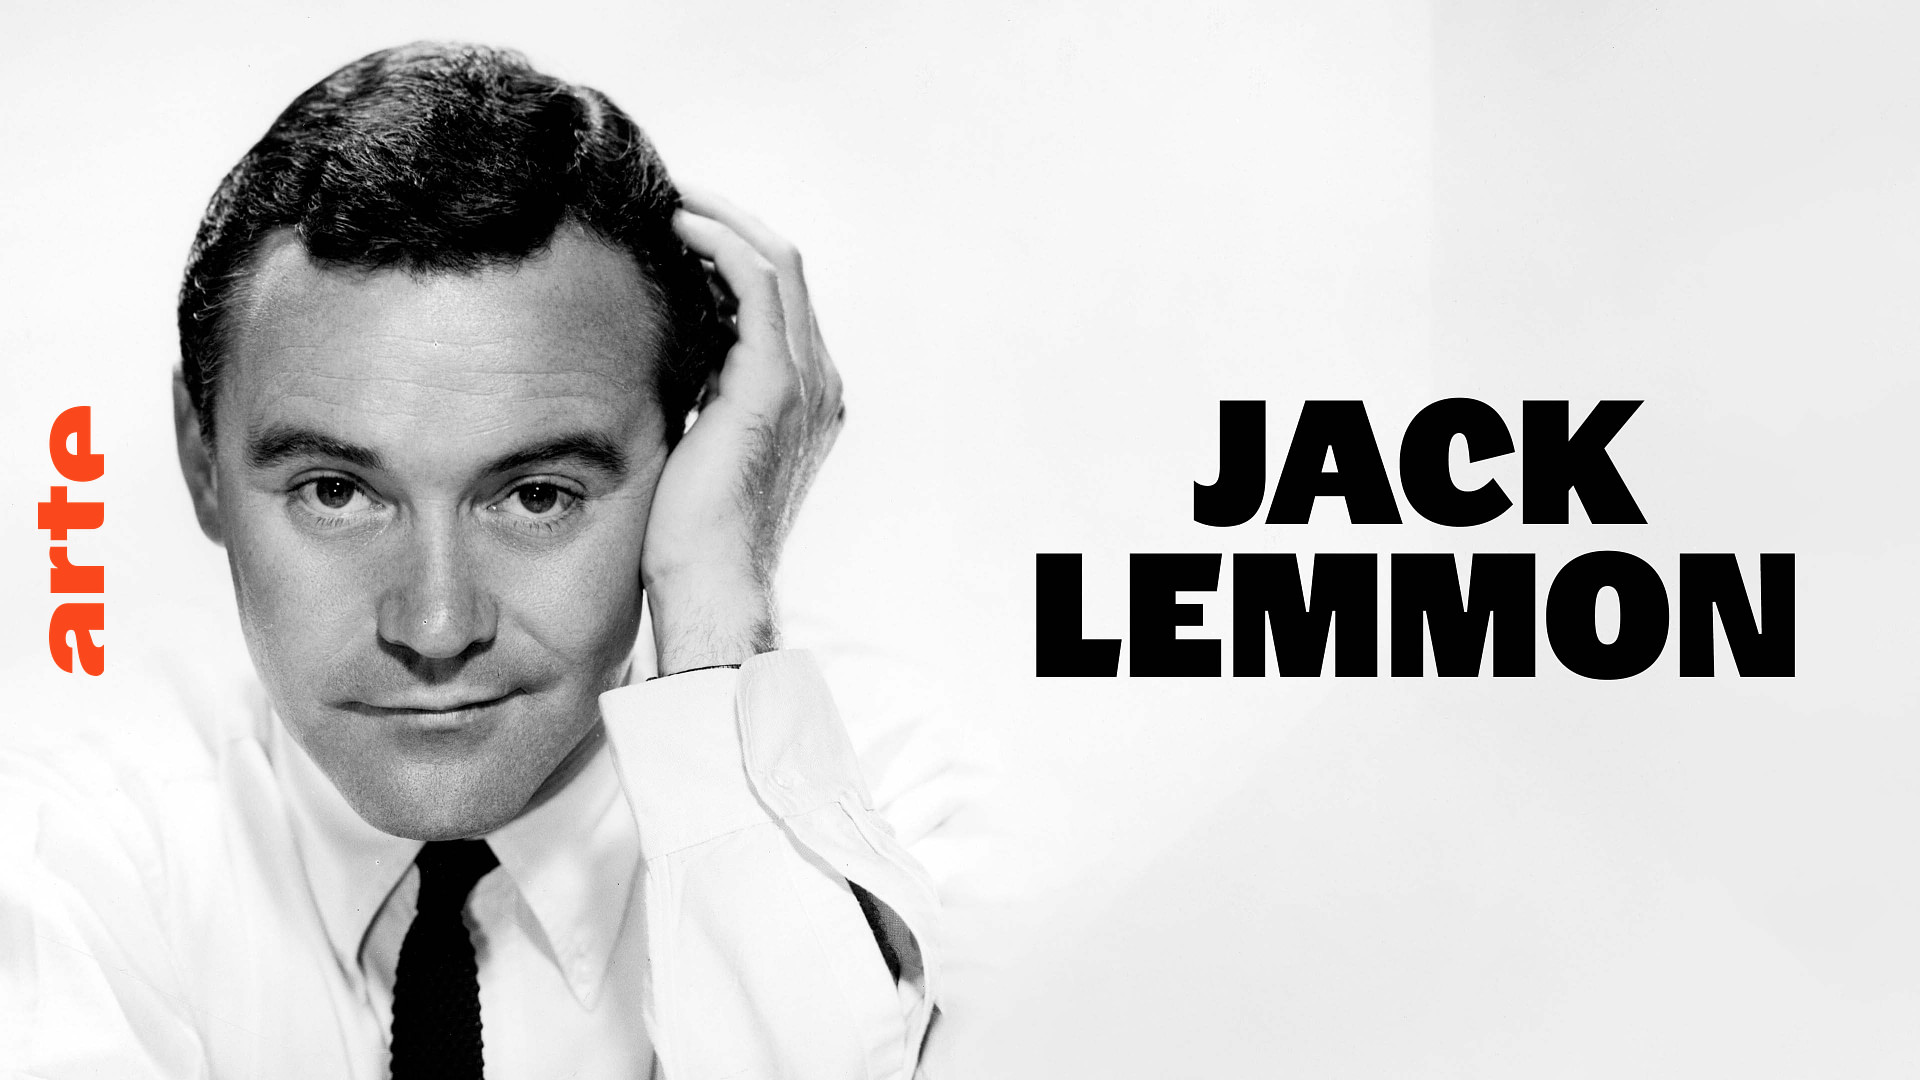 Jack Lemmon - Nobody's perfect